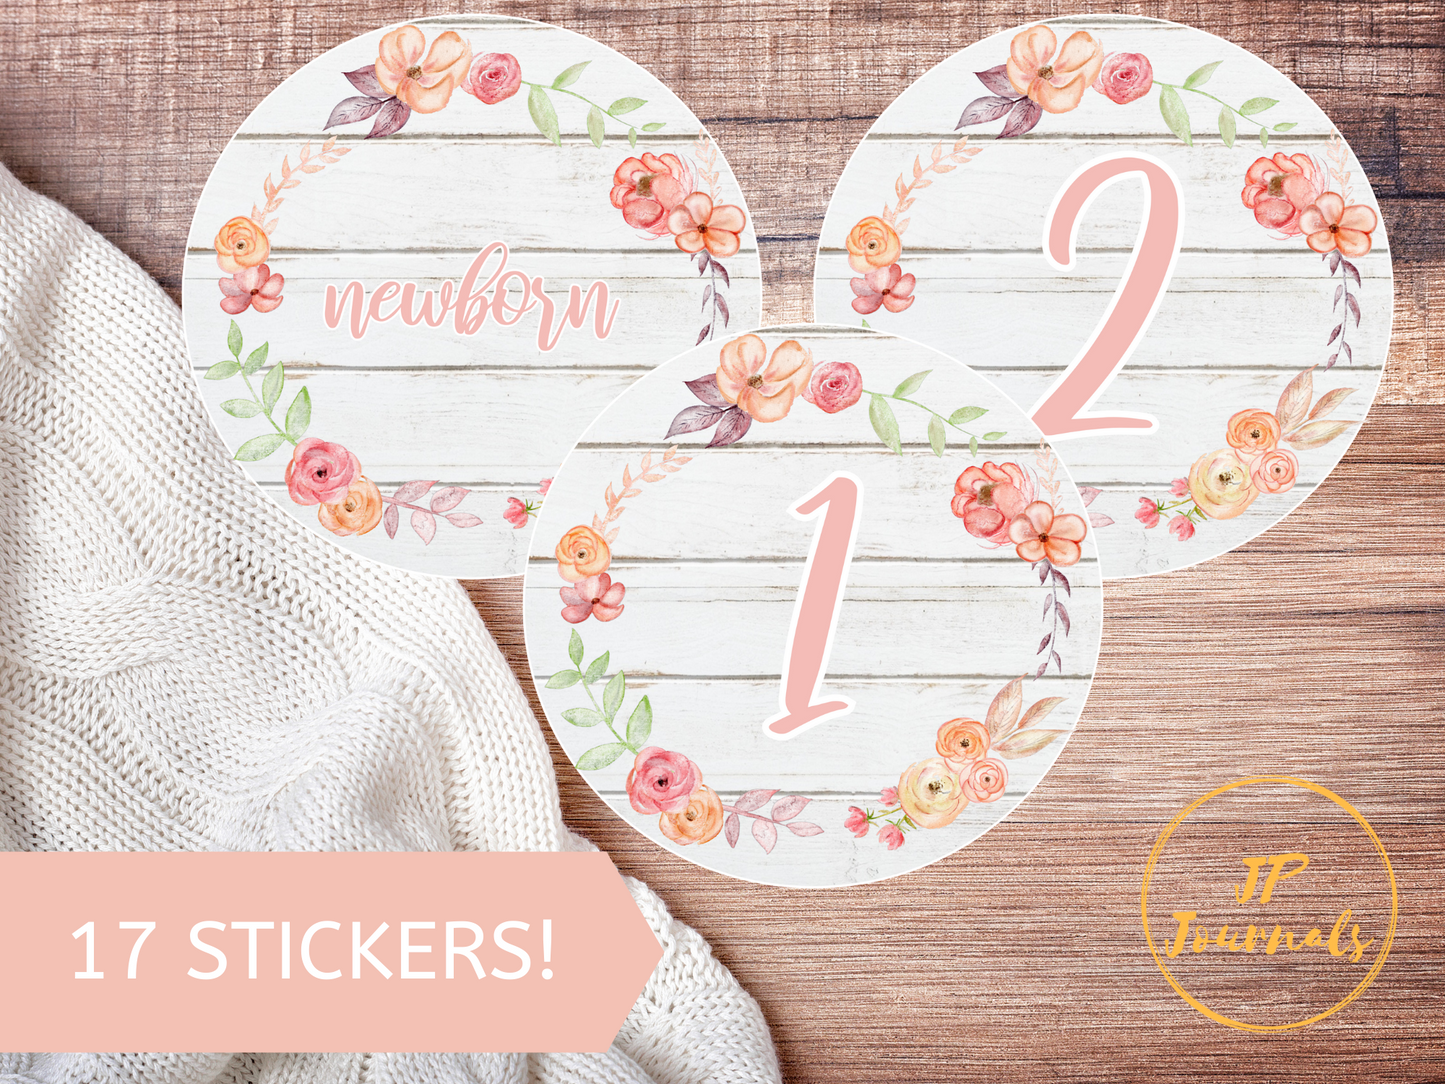 Baby Milestone Stickers, Rustic Floral Month Stickers for Baby Girl, Monthly Photo Stickers, Pretty Blush Pink Wood Design, Milestone Photo